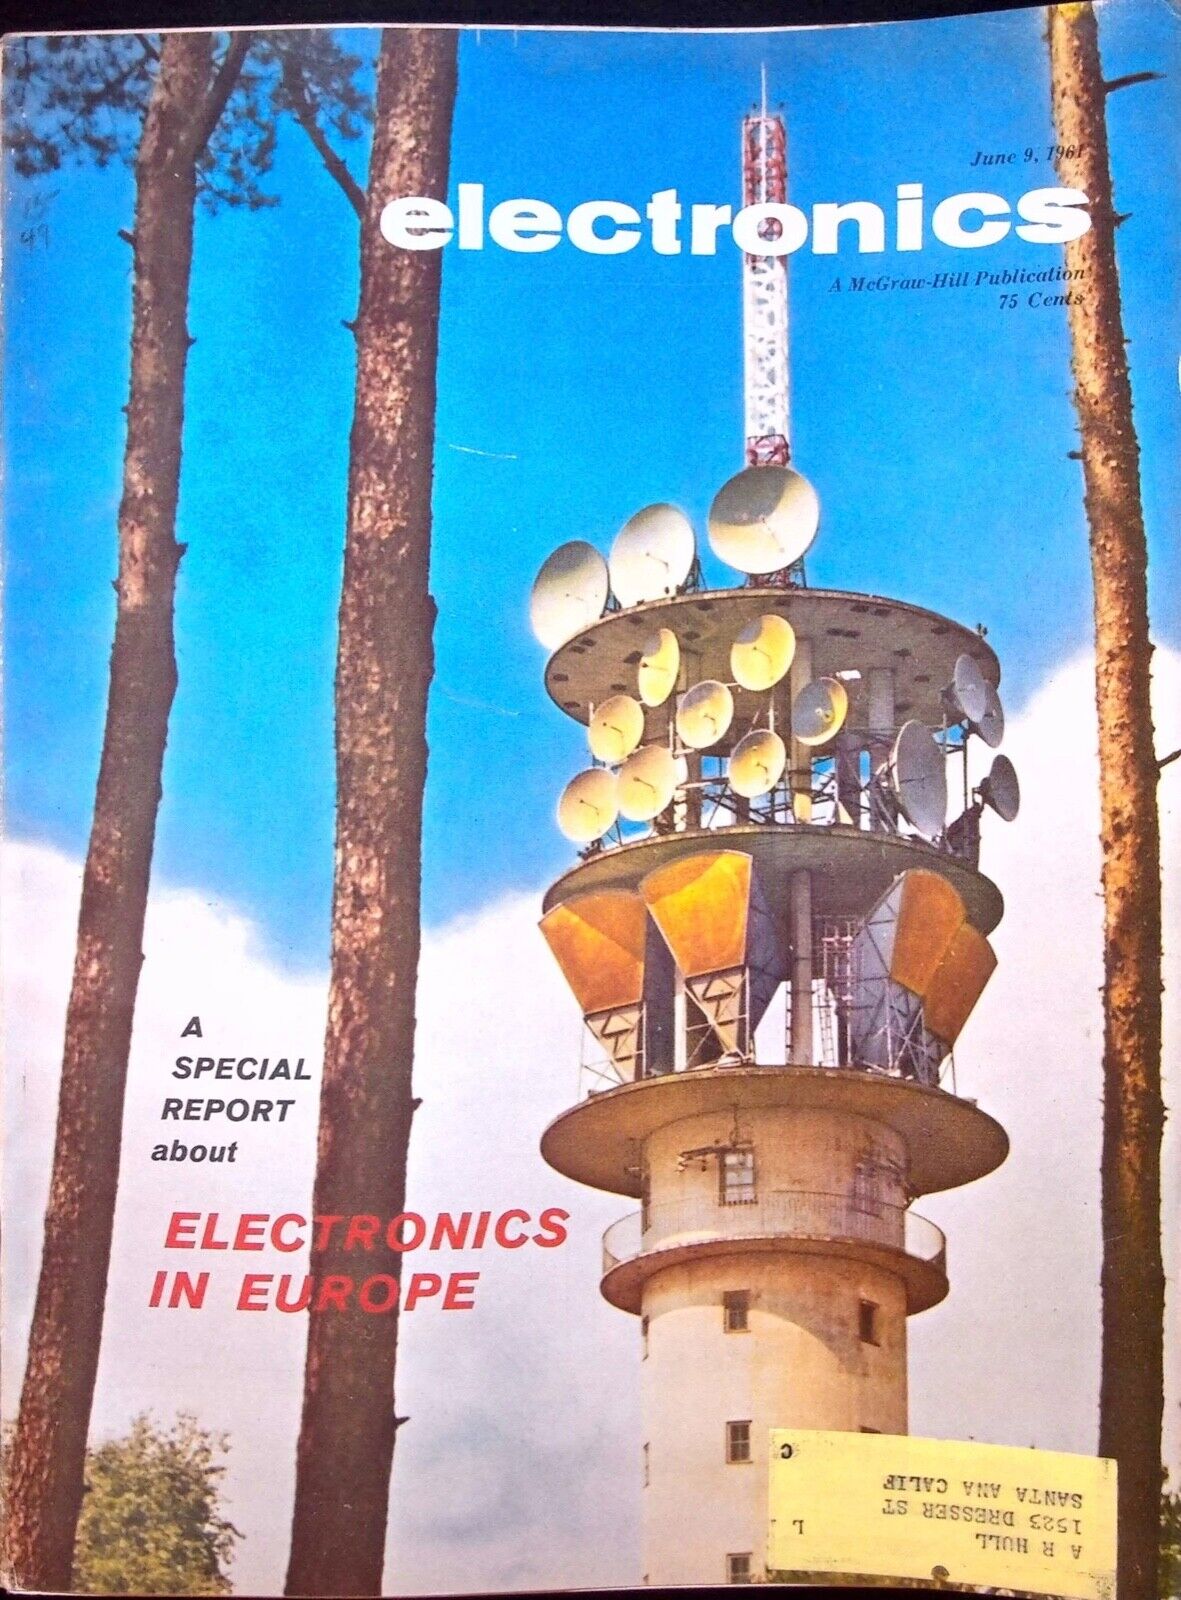 VINTAGE ELECTRONICS IN EUROPE - ELECTRONICS MAGAZINE, JUNE 9, 1961